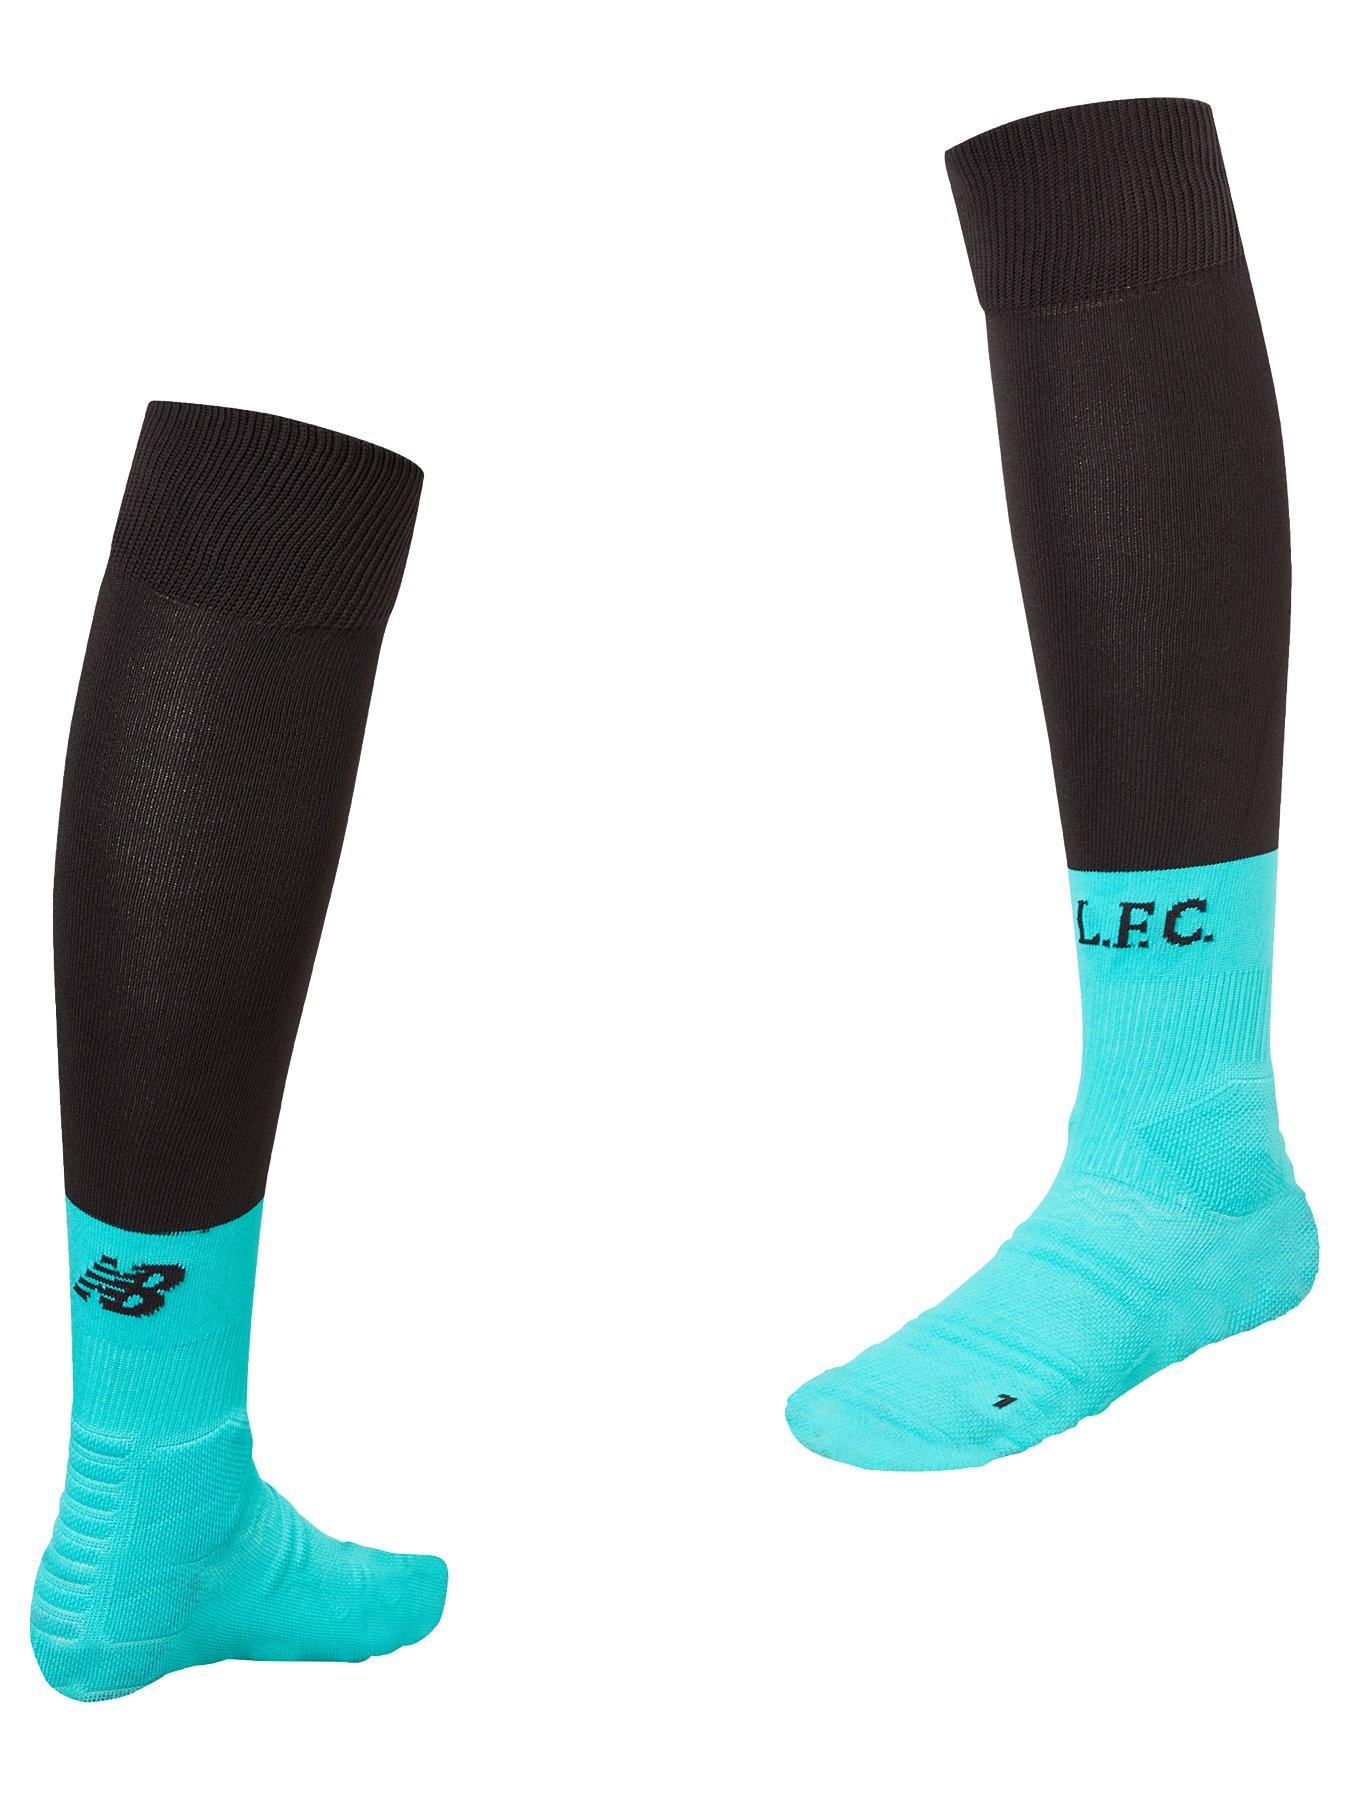 liverpool 3rd kit socks